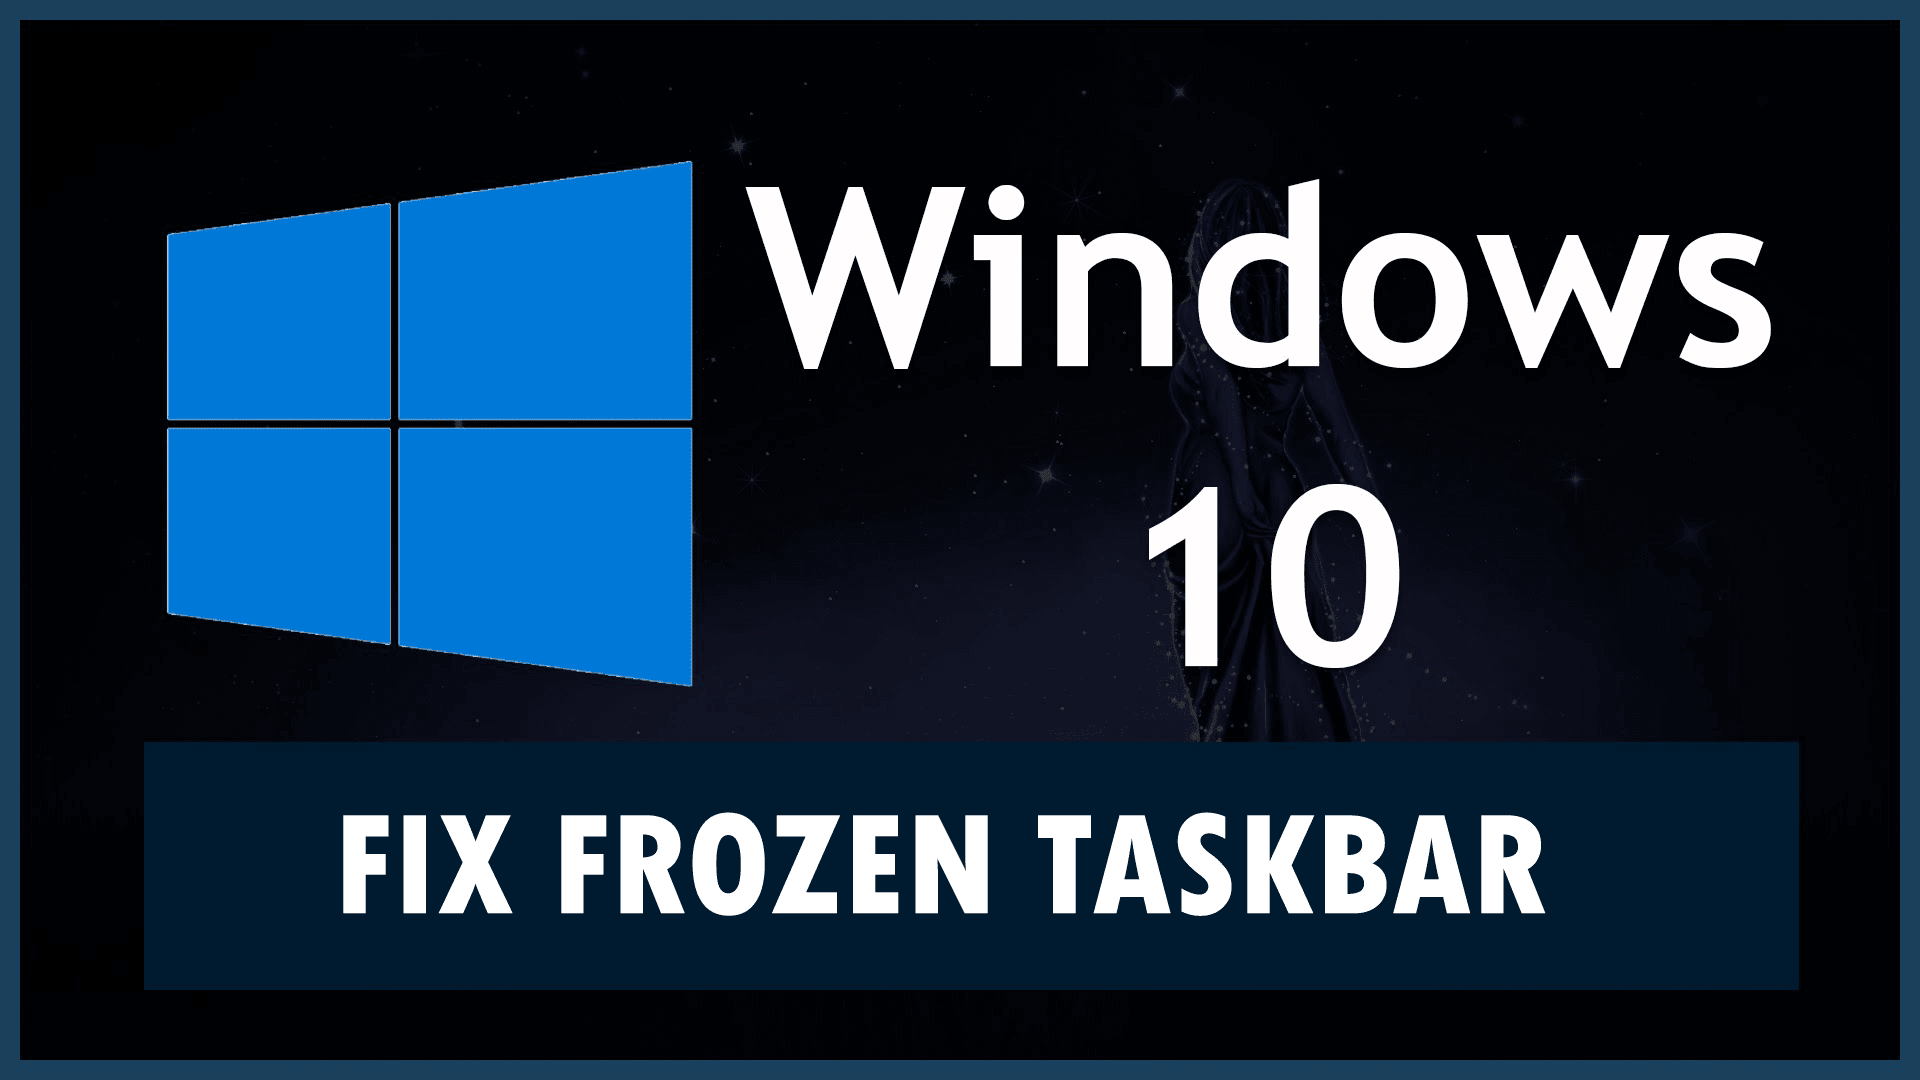 frozen taskbar in Windows 10